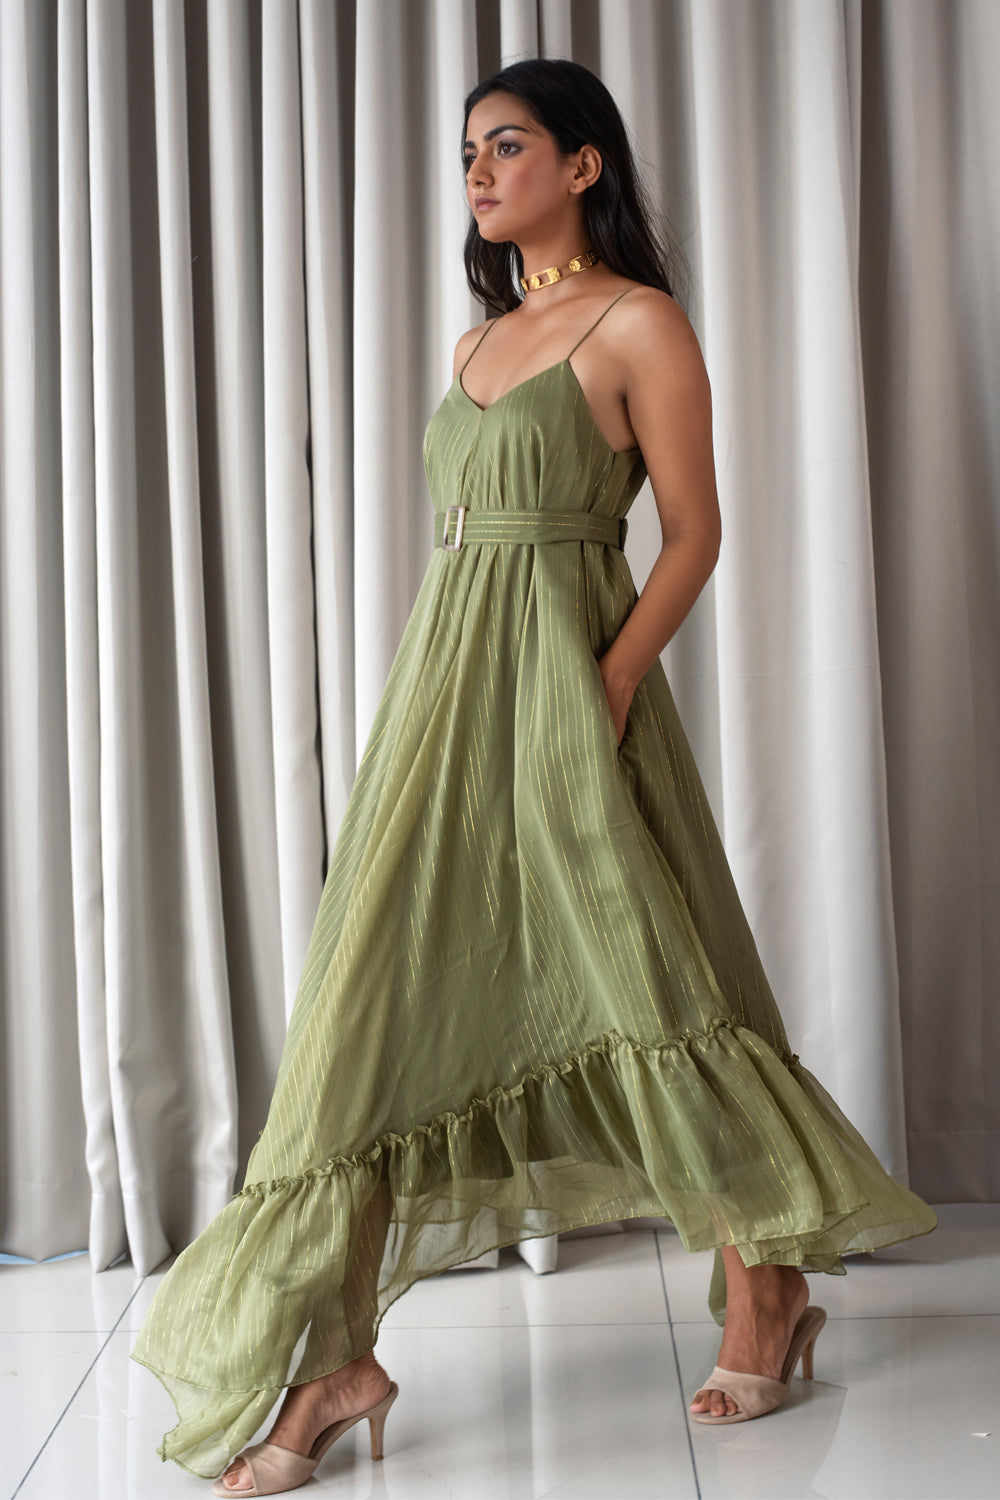 Olive green dress